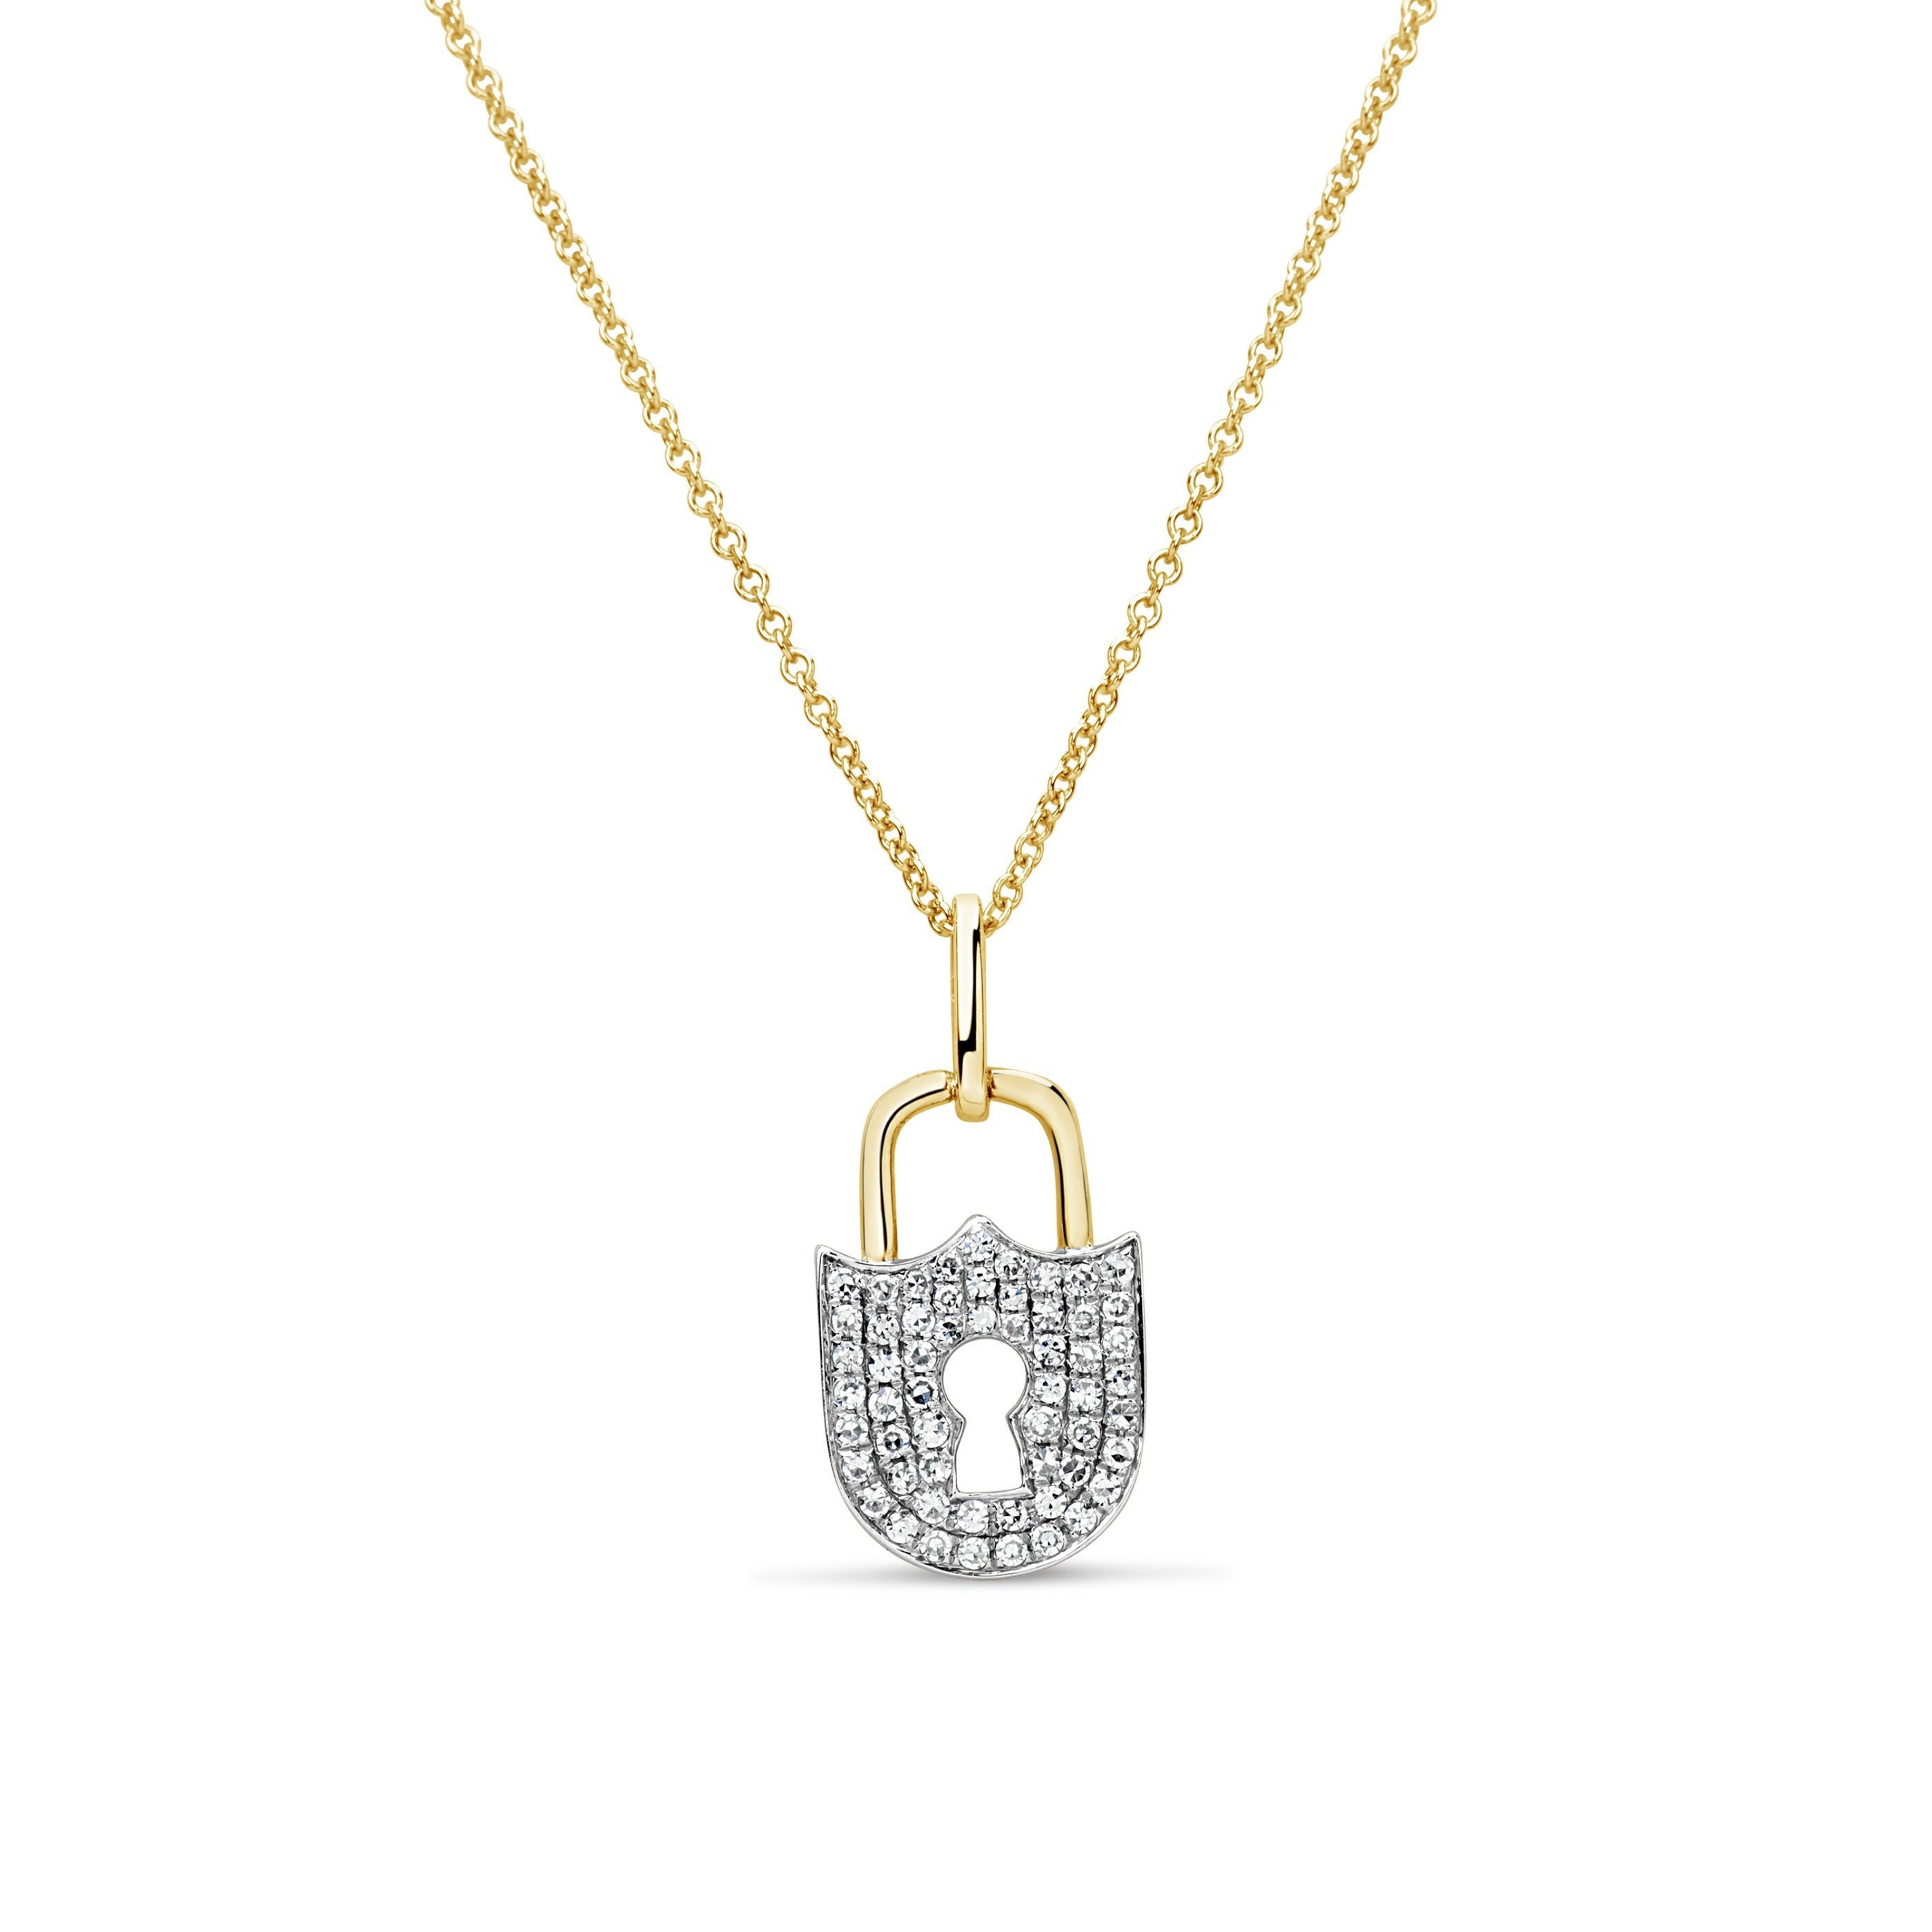 14K White Gold Diamond Lock and Key Charm